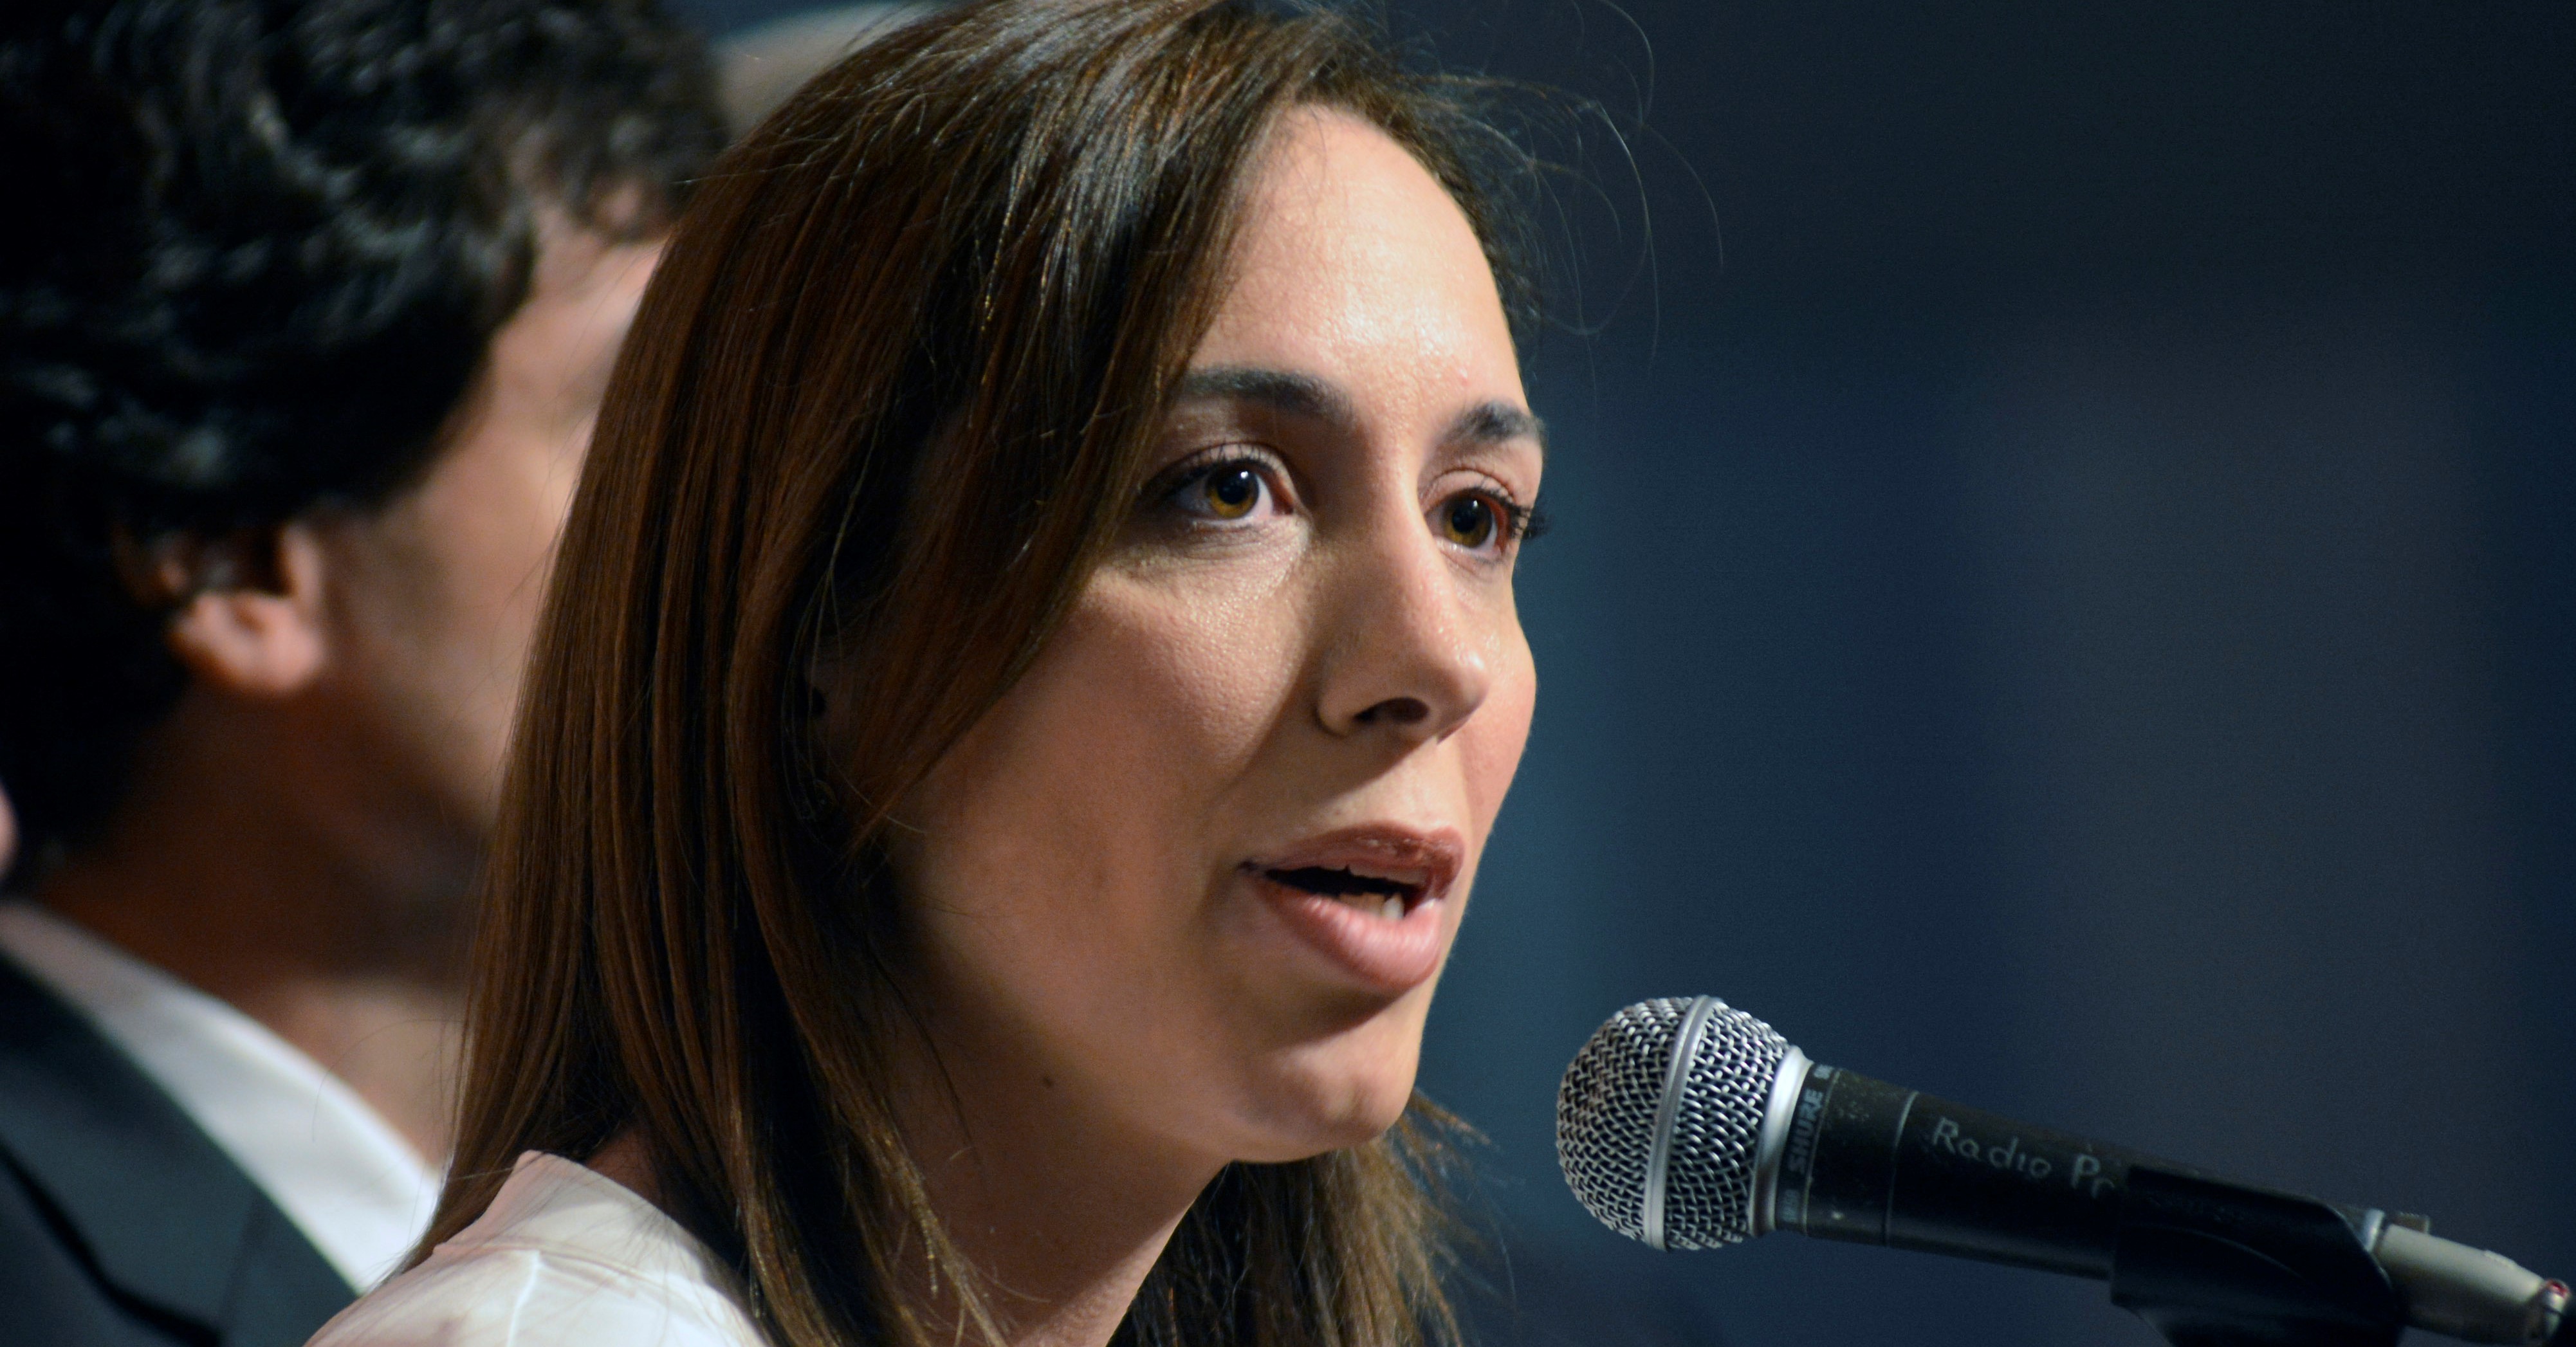 Vidal afirmó que “todavía no decidió” si será candidata a Presidenta en 2019